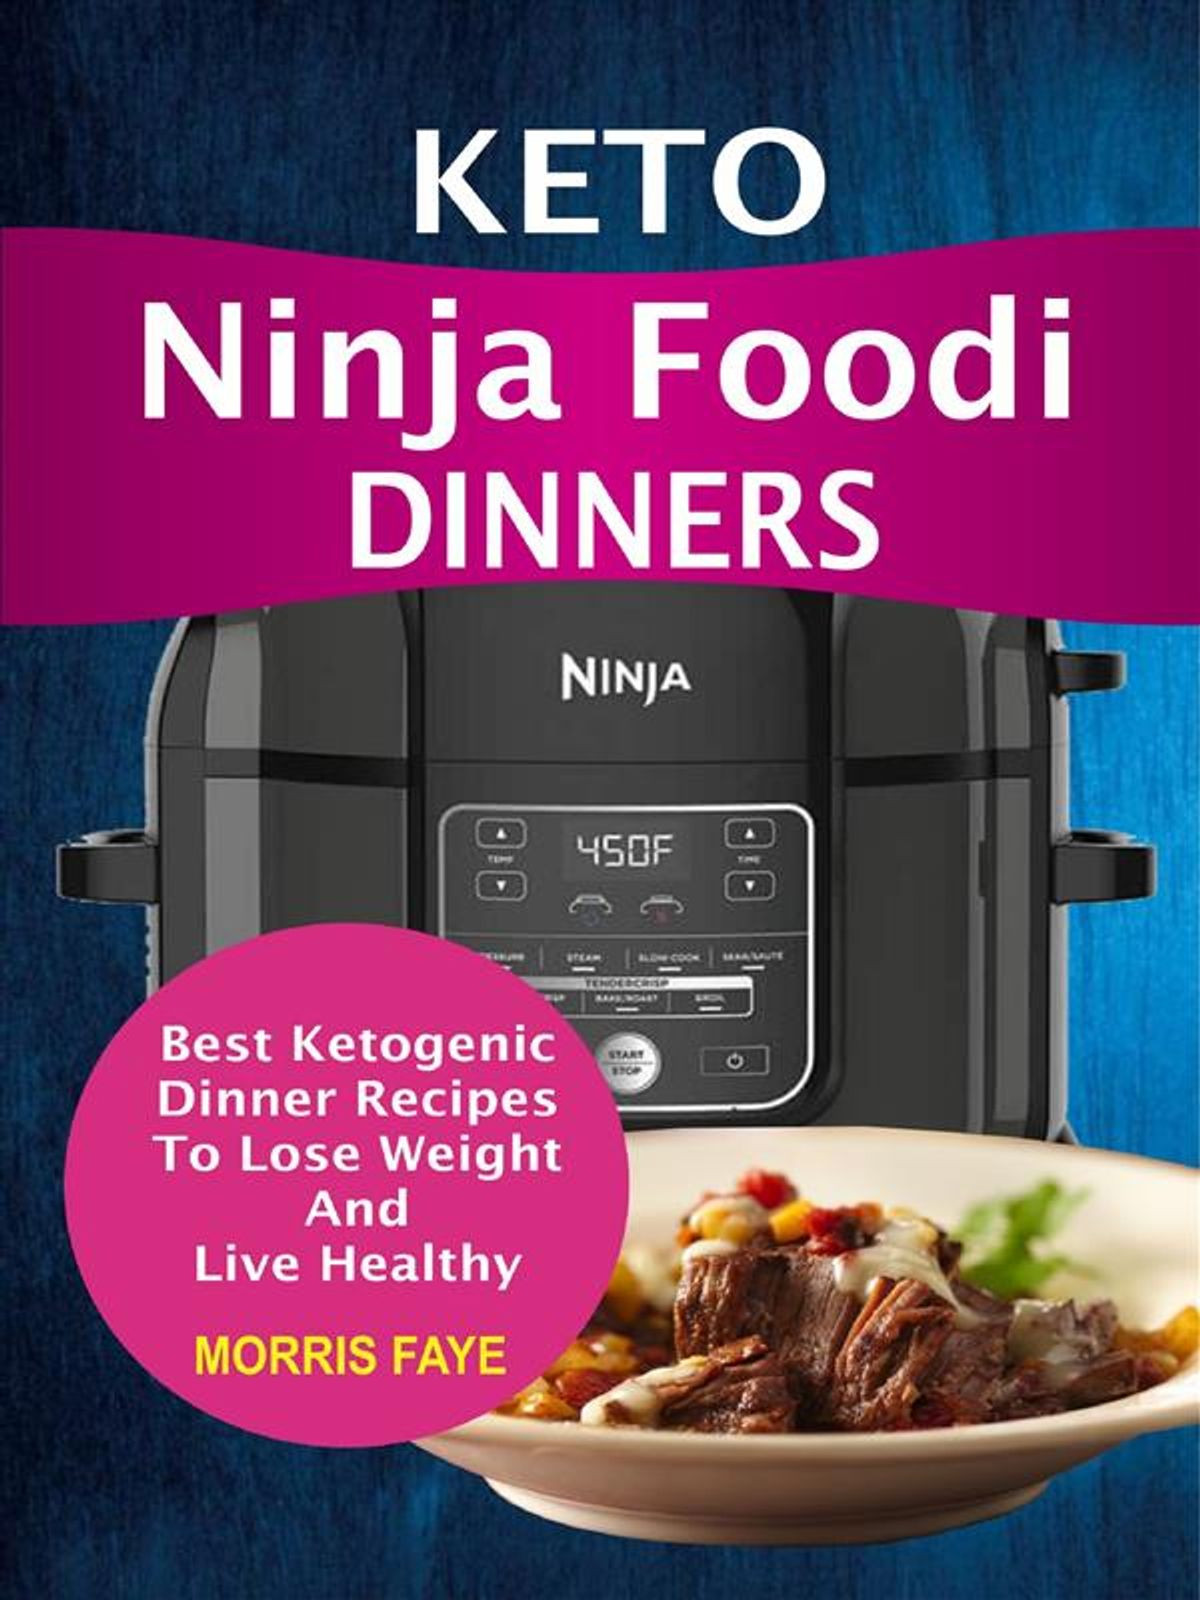 Ninja Foodi Recipes Healthy Keto
 Keto Ninja Foodi Dinners Best Ketogenic Dinner Recipes To